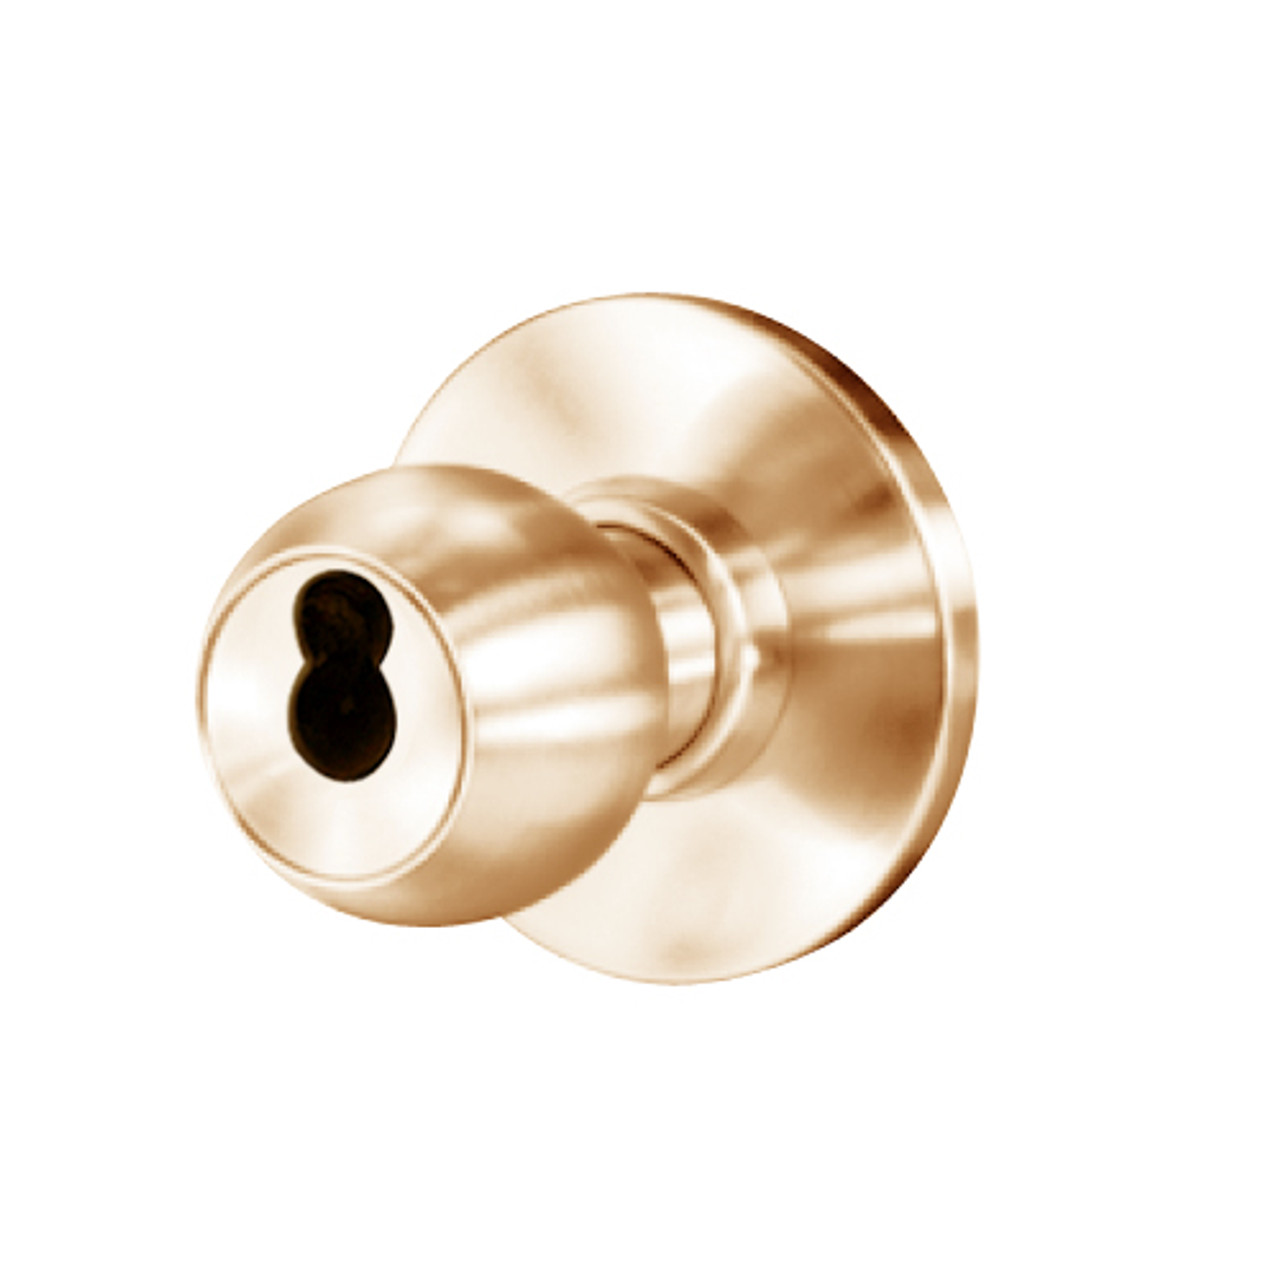 8K47YR4ASTK611 Best 8K Series Exit Heavy Duty Cylindrical Knob Locks with Round Style in Bright Bronze